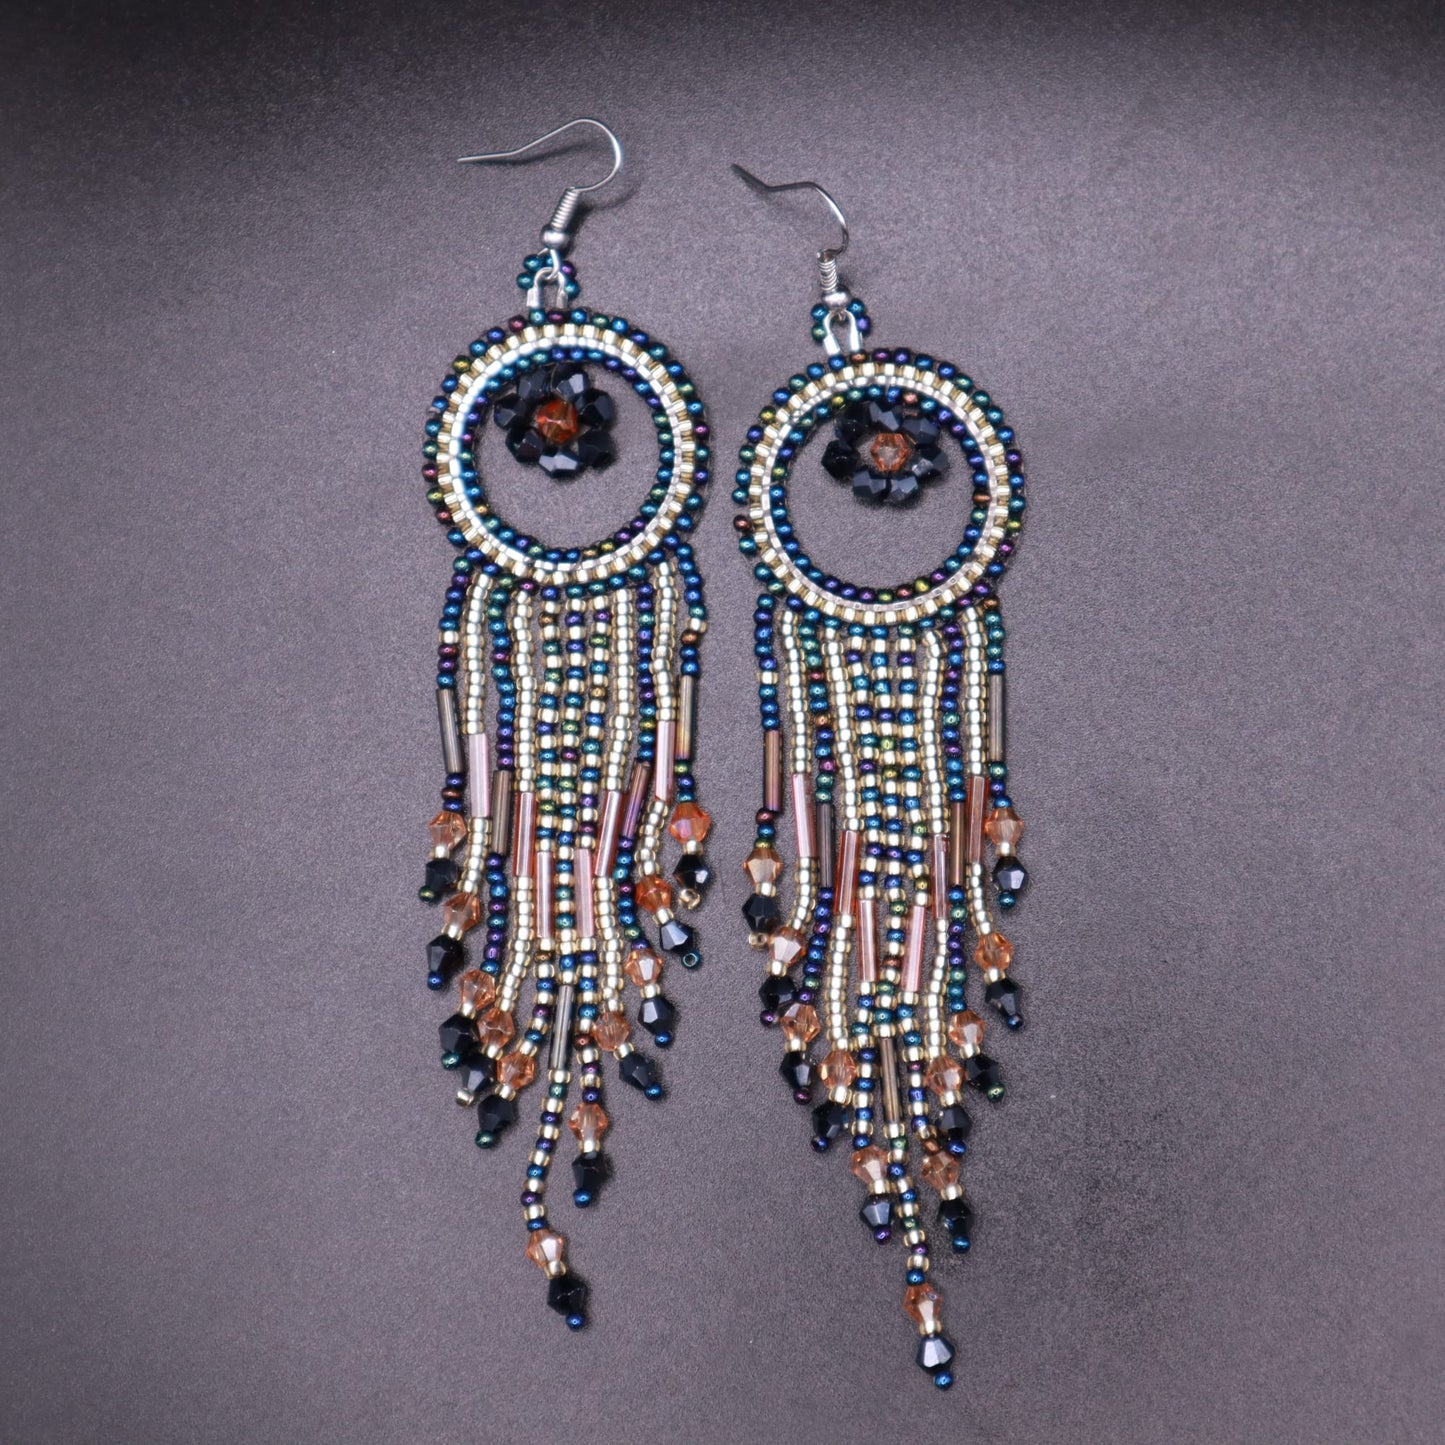 Beaded fringe earrings with metallic peacock seed bead earrings beadwork jewelry